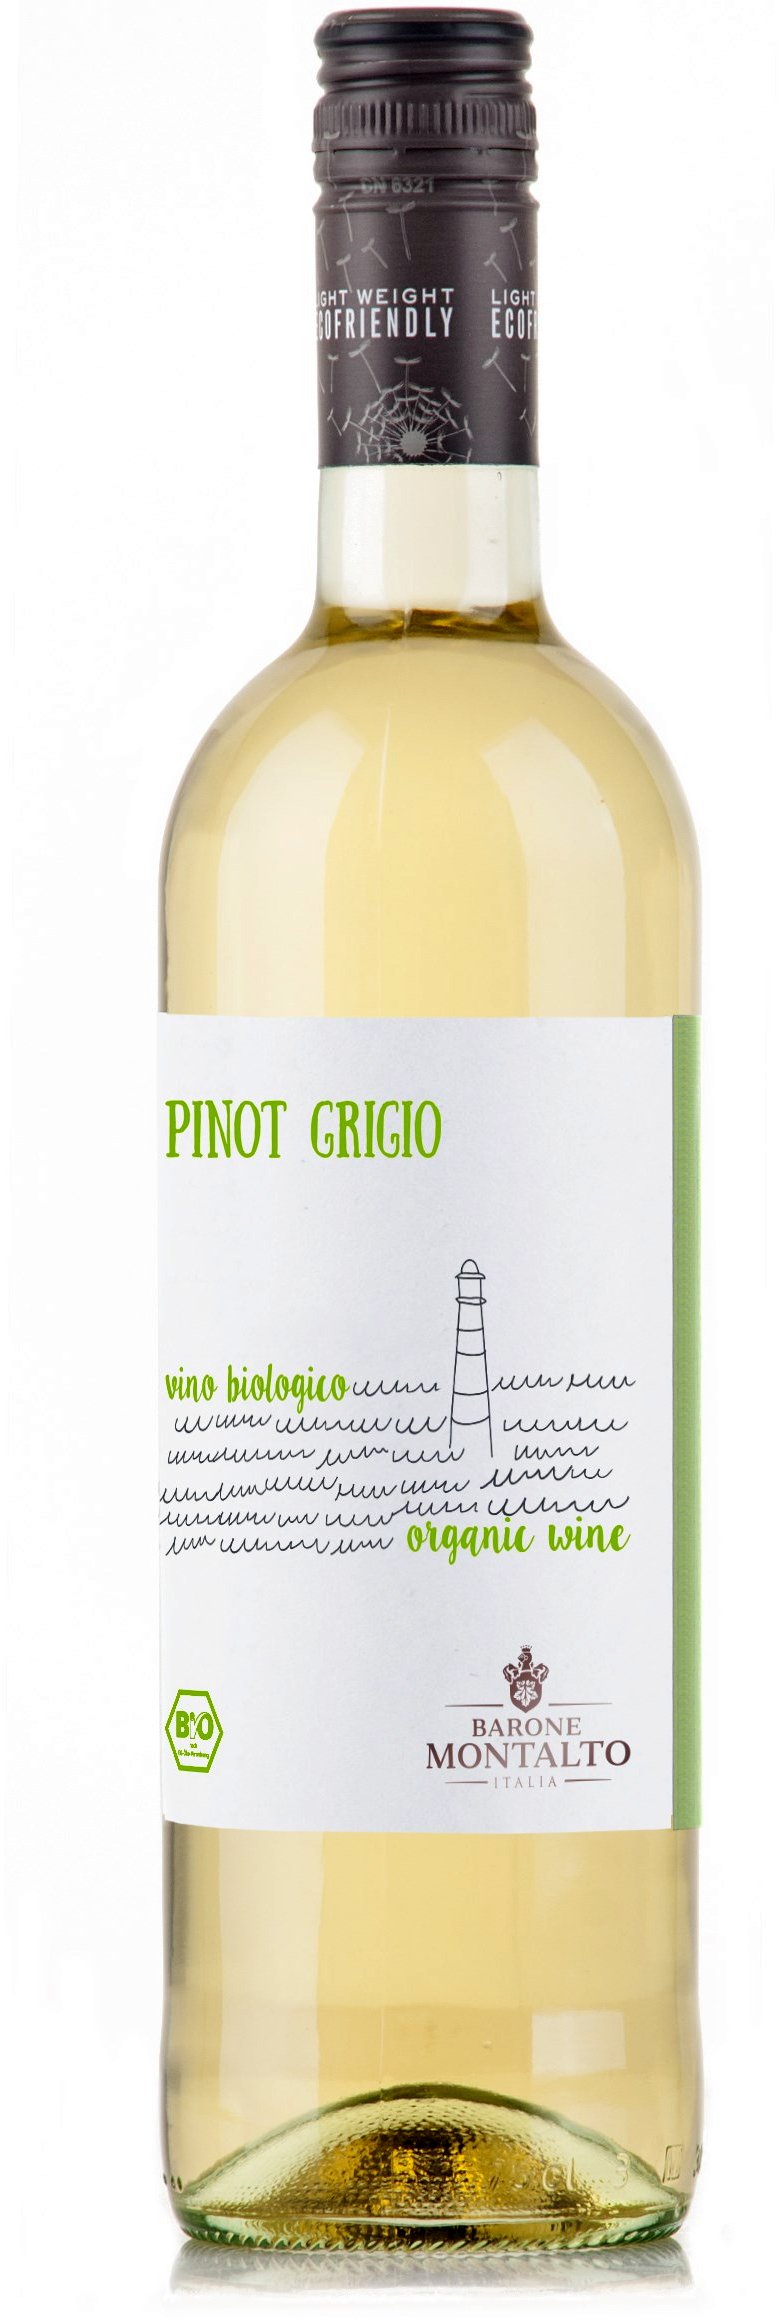 Barone Montalto Pinot Grigio Sicilia IGT Organic Bio 470081041 Italien WeinUnion